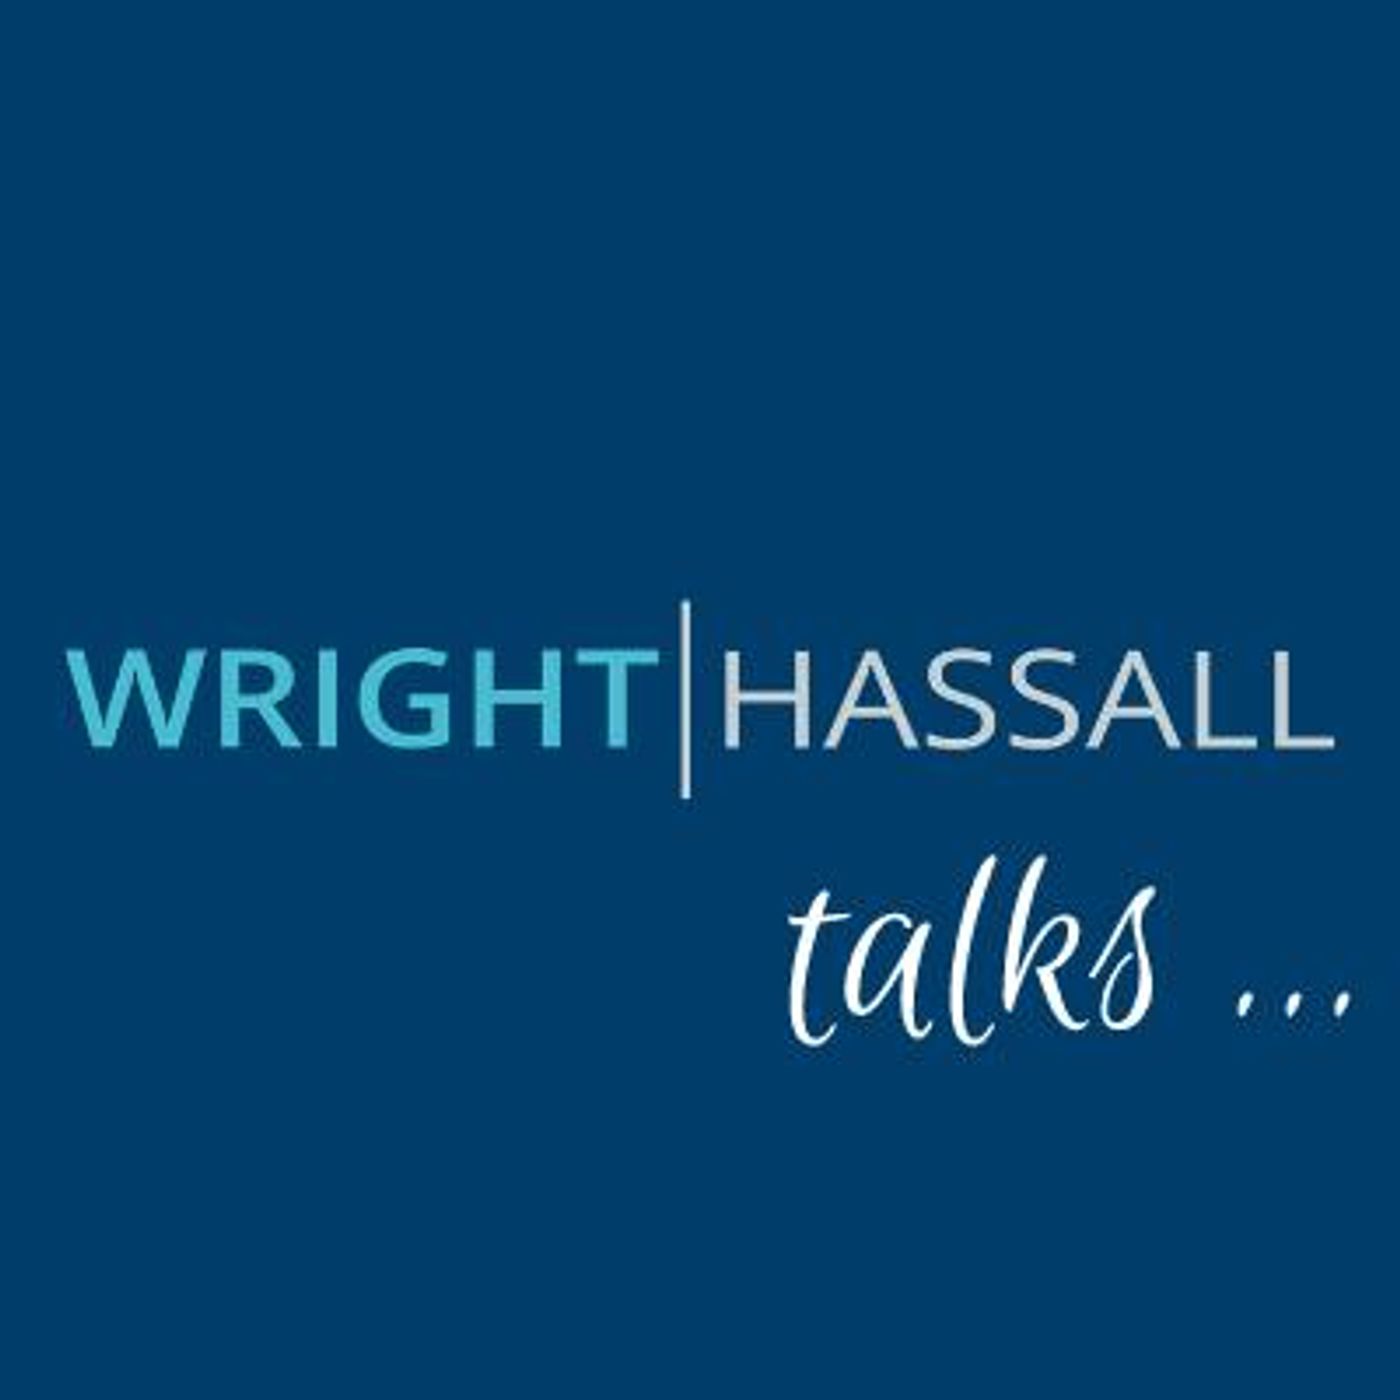 Wright Hassall talks construction law